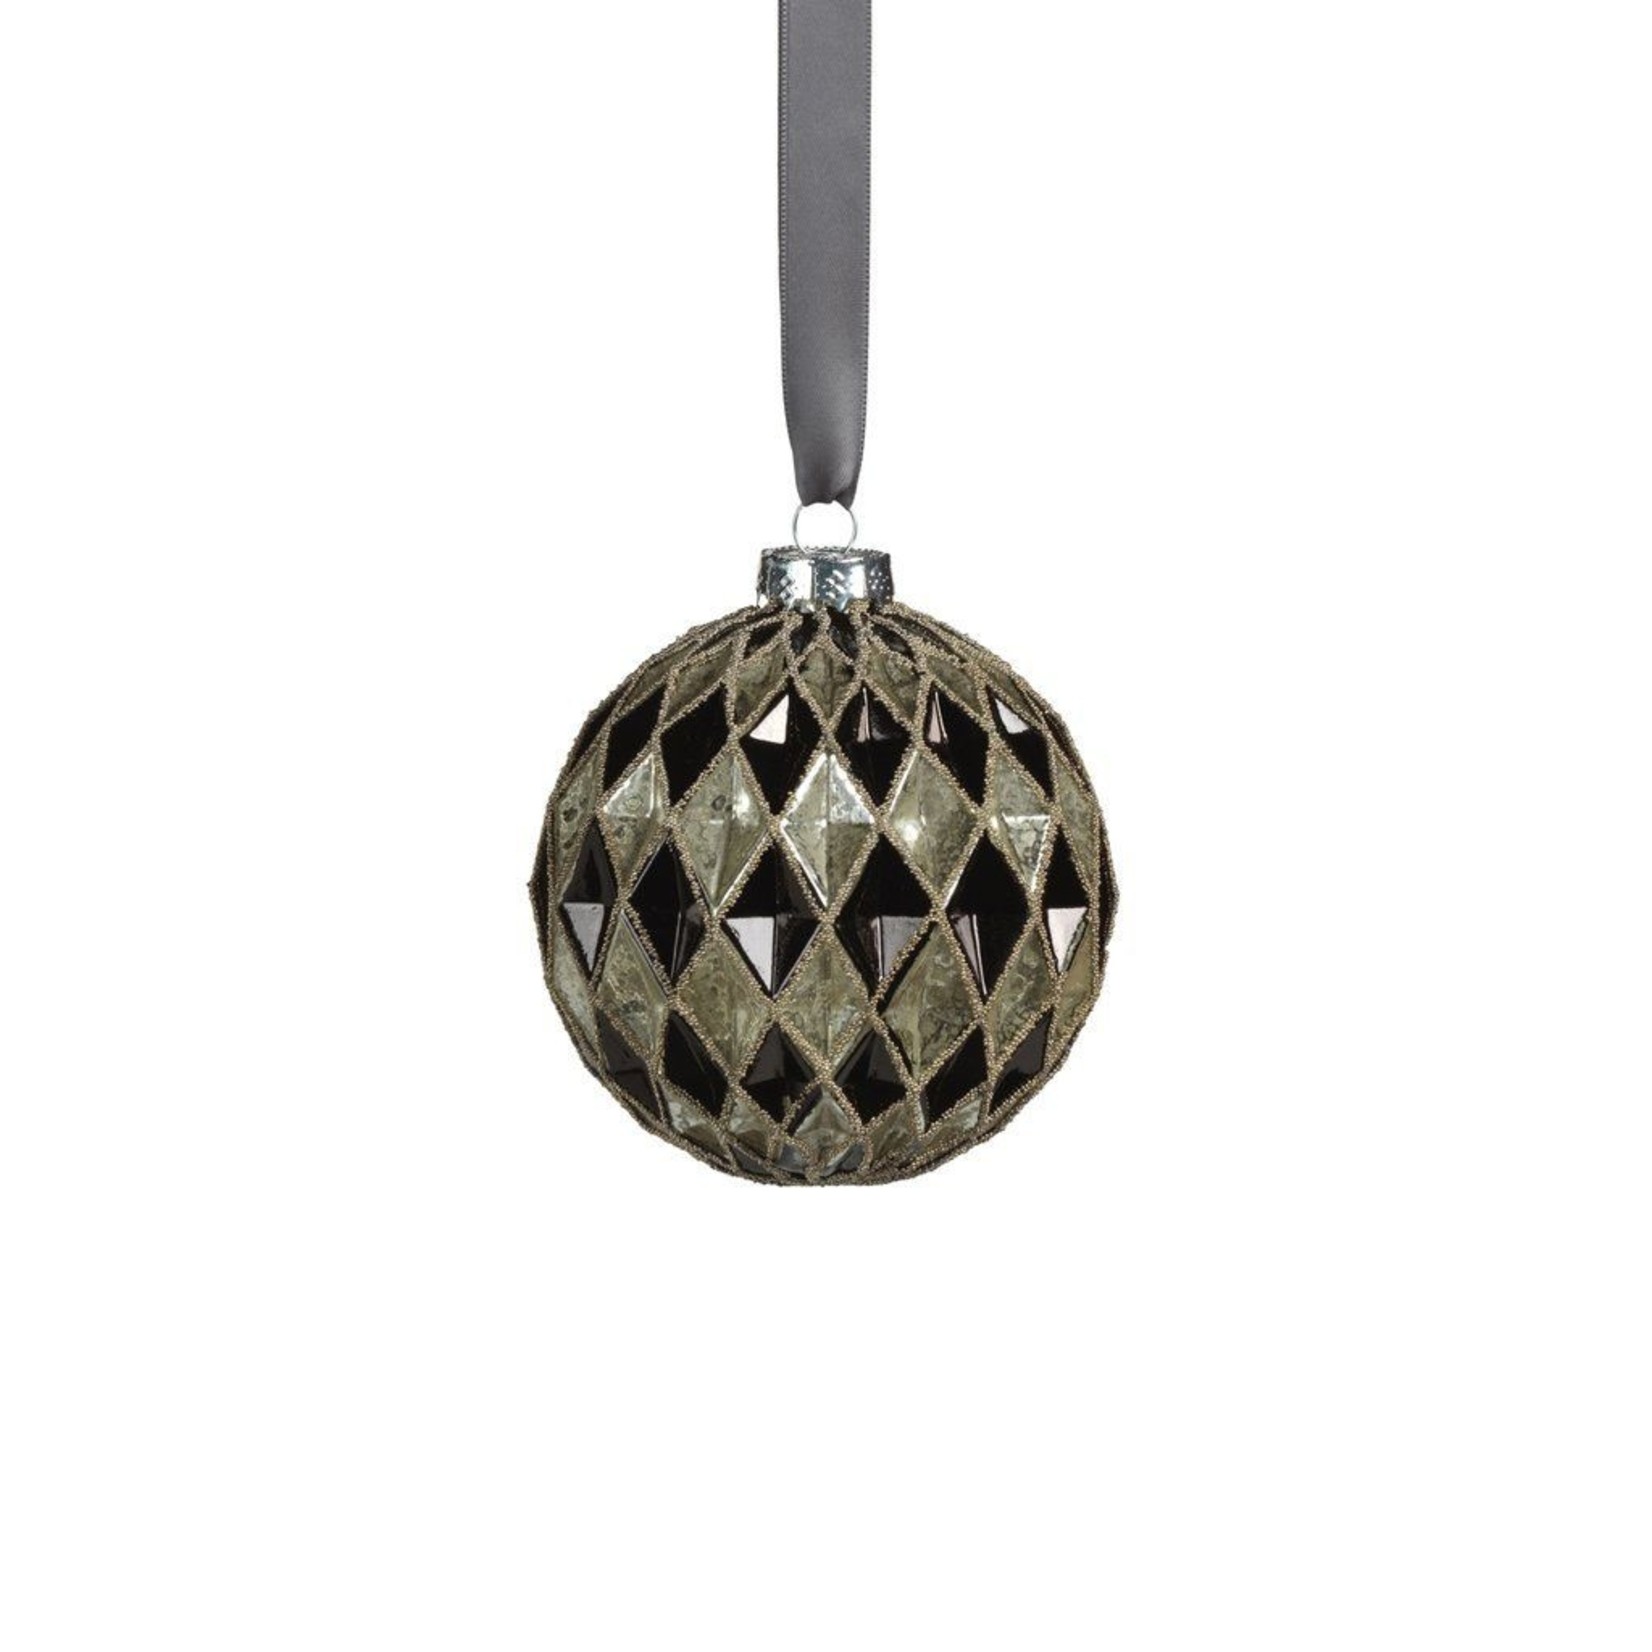 Zodax Harlequin Black and Silver Glass Ornament 3.25"